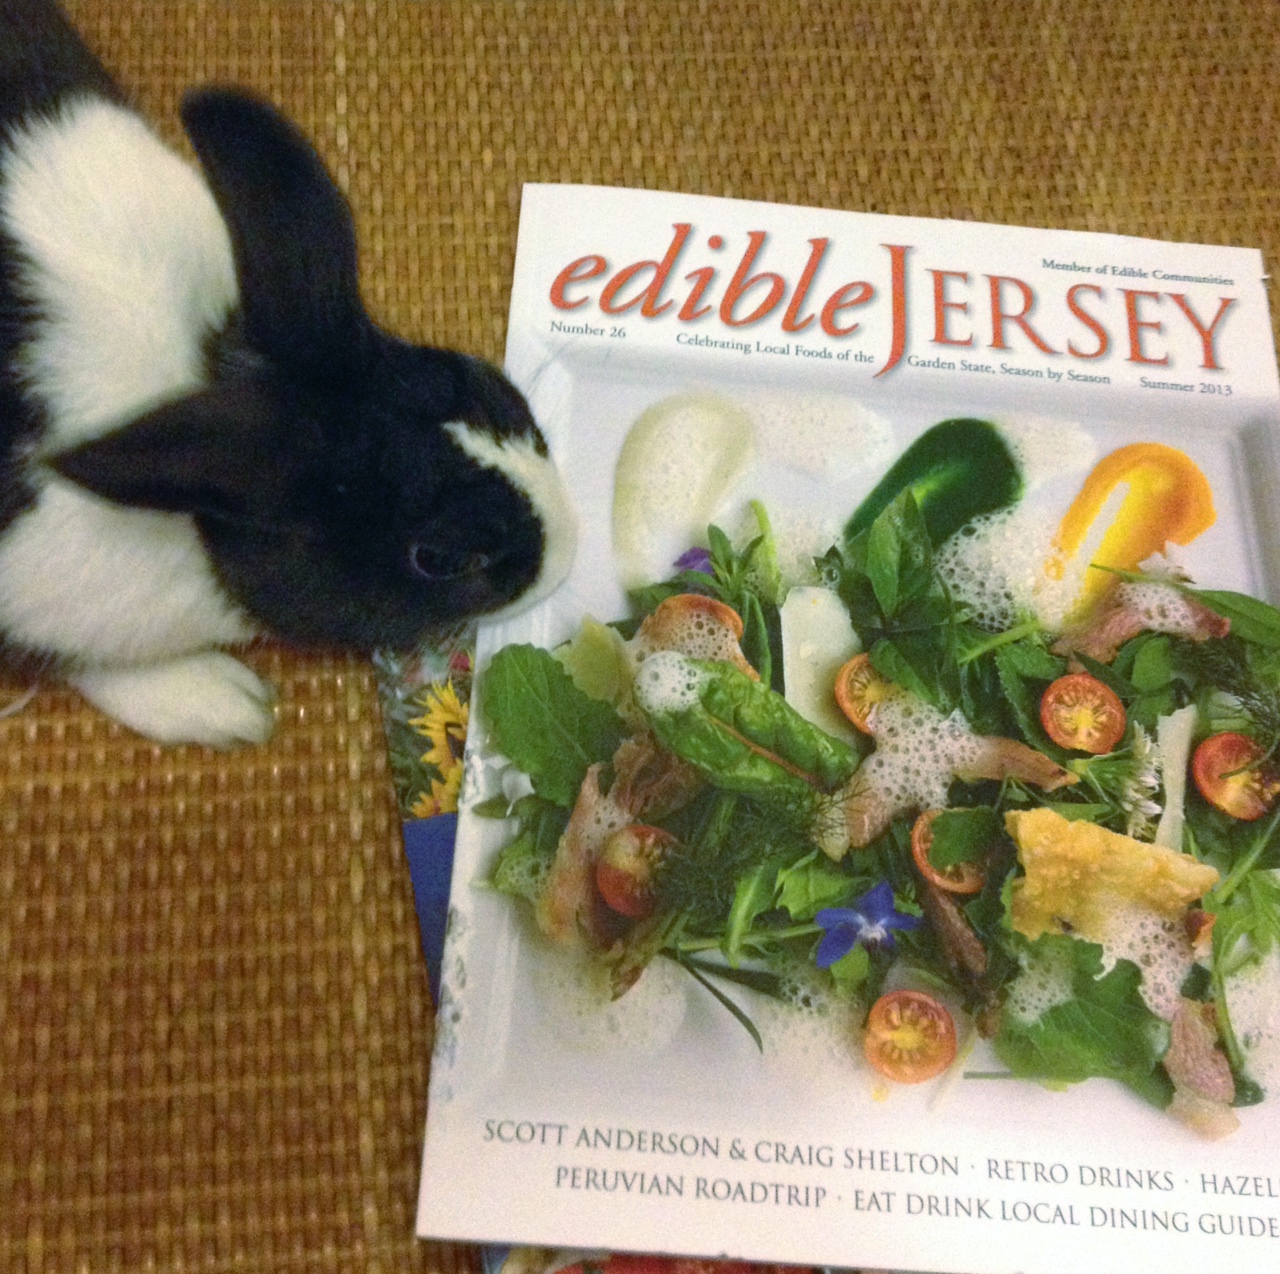 Bunny, Edible Magazine Isn't Meant to be Actually Eaten